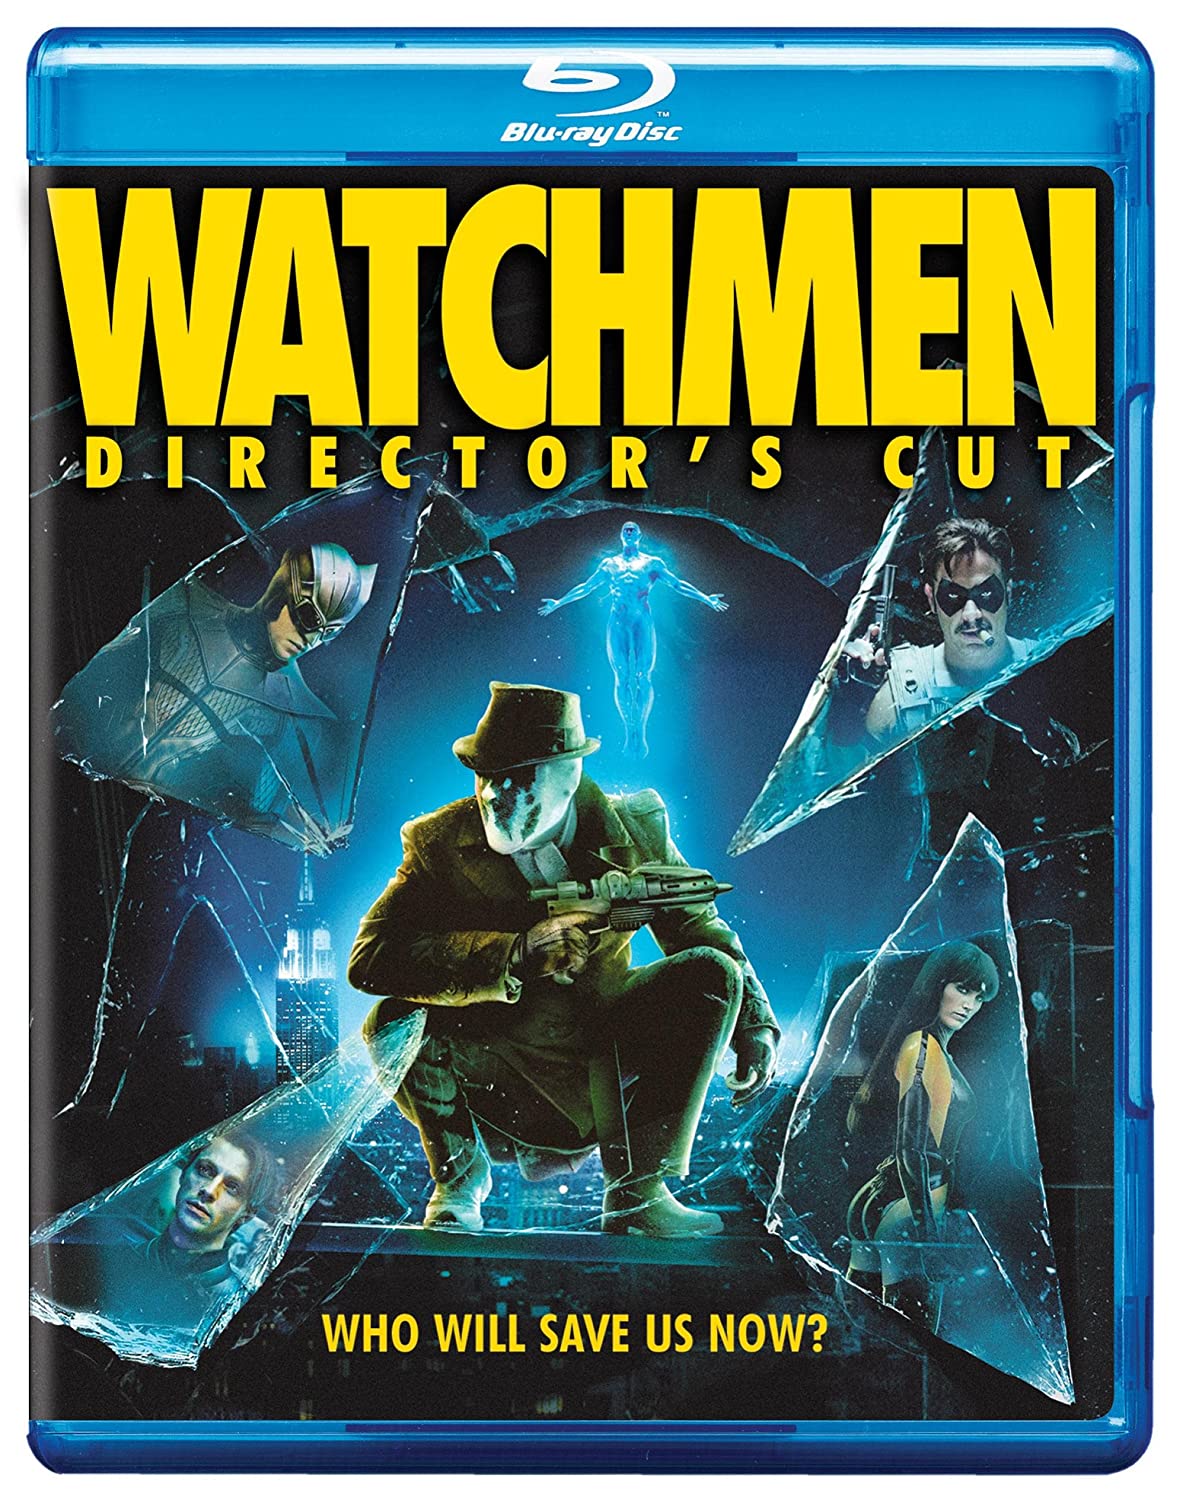 Watchmen Director's Cut Blu-ray